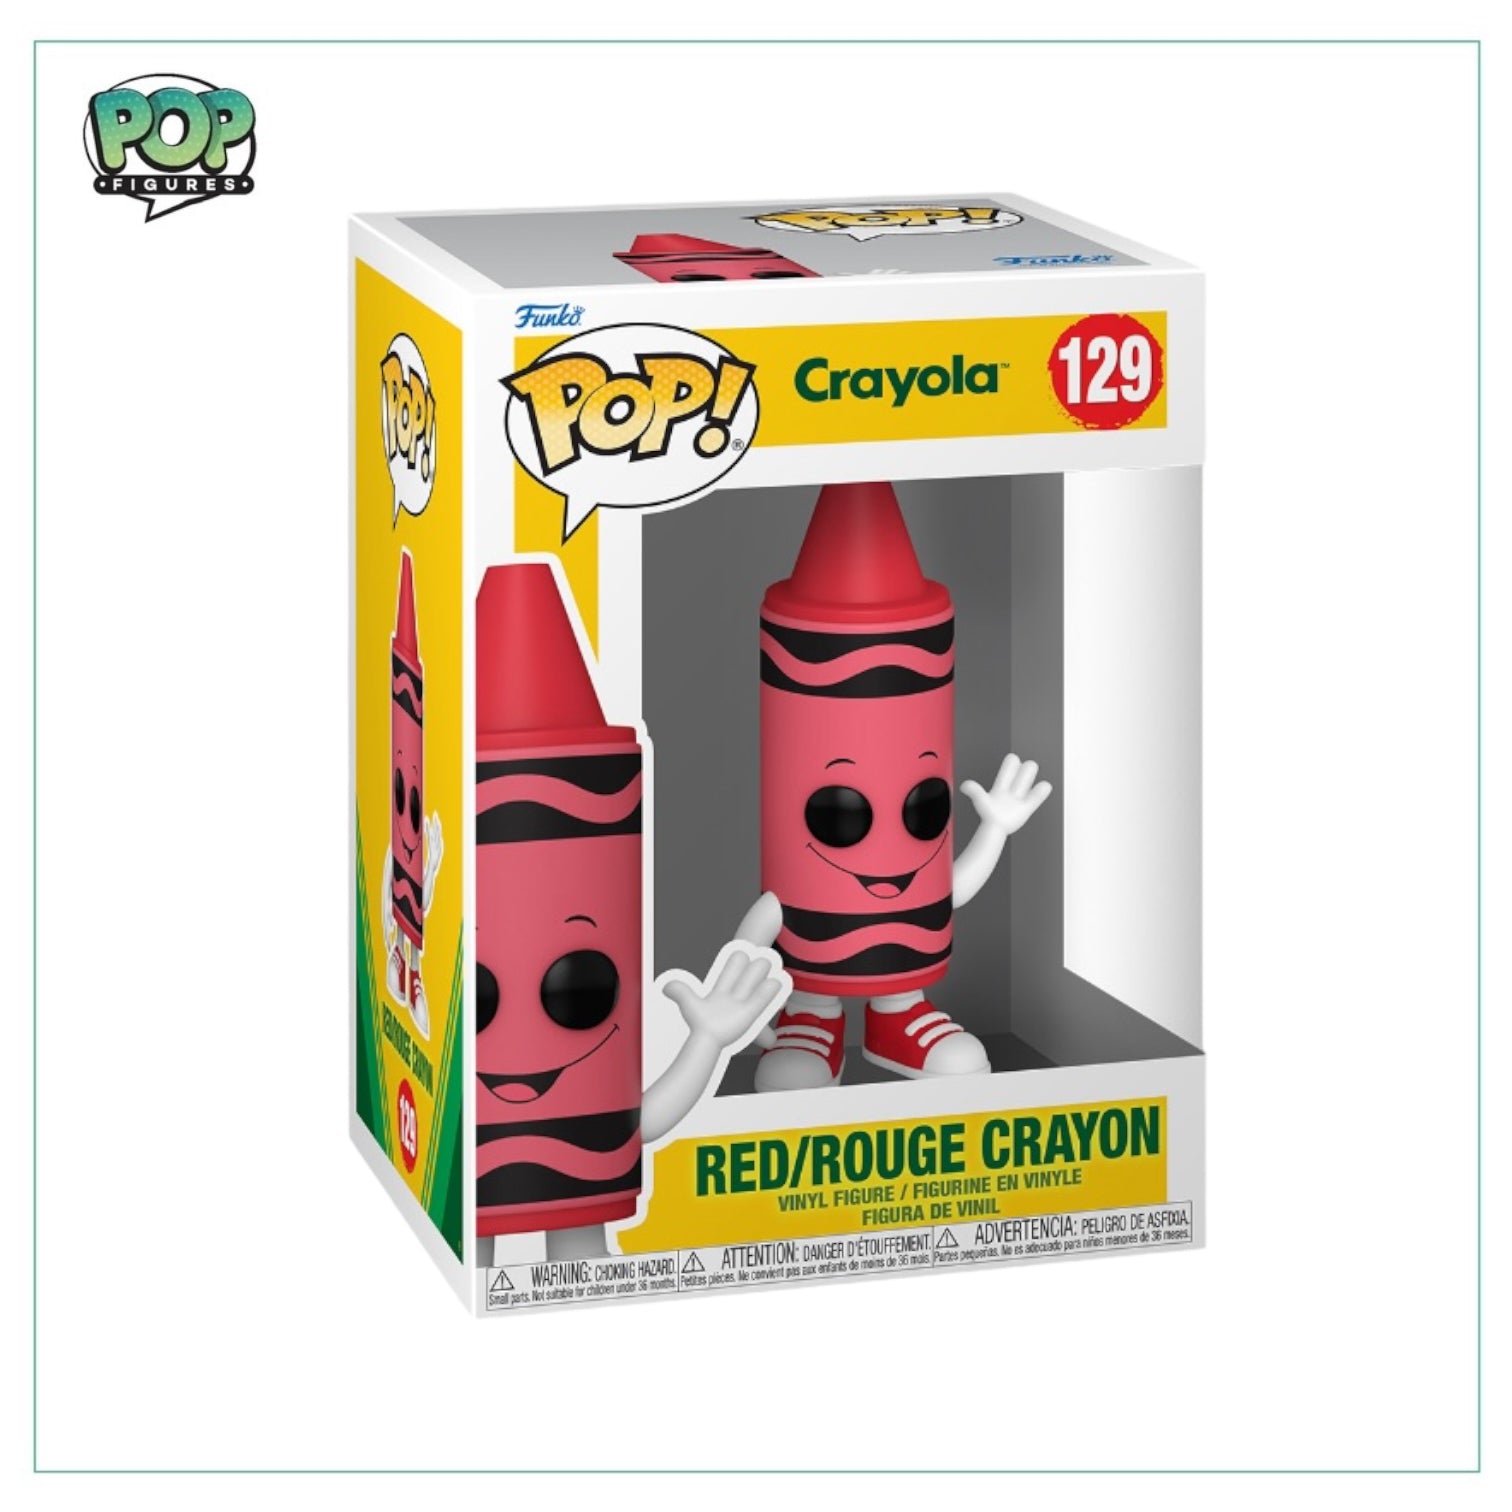 Red/Rouge Crayon #130 Funko Pop! - Crayola